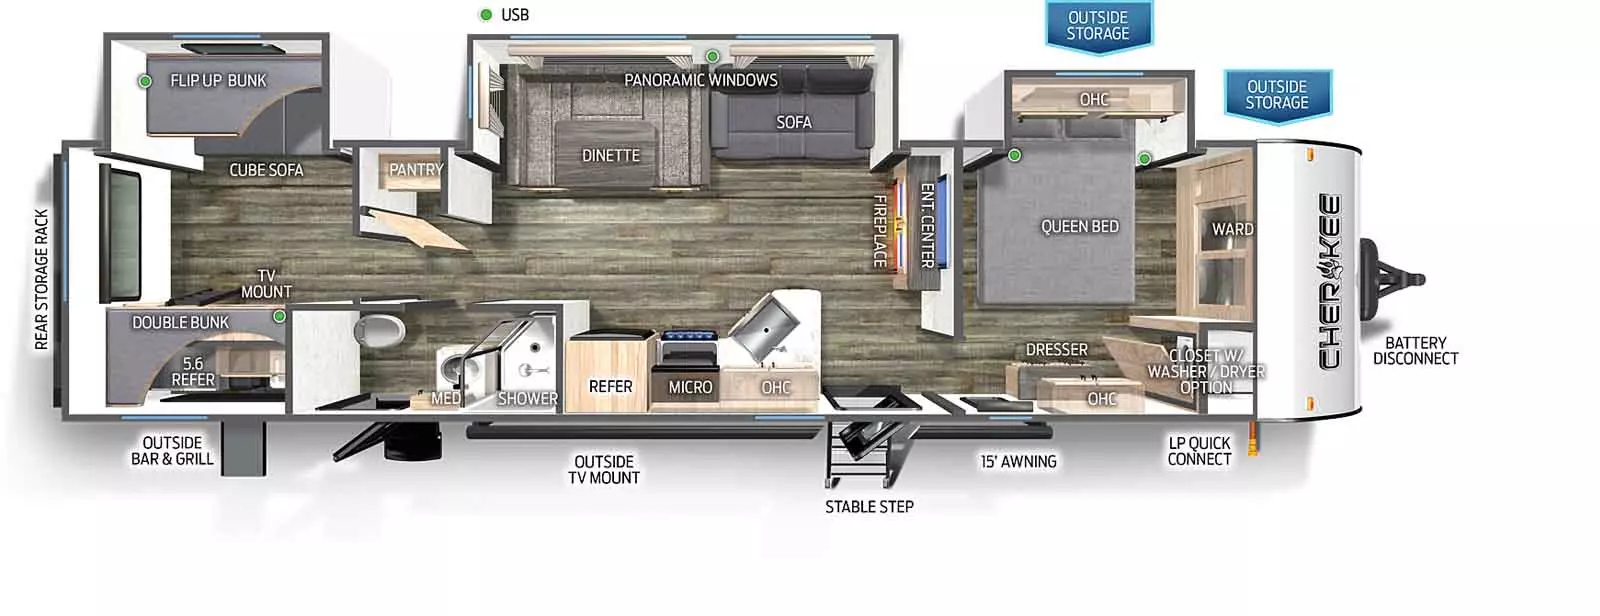 324TS Floorplan Image